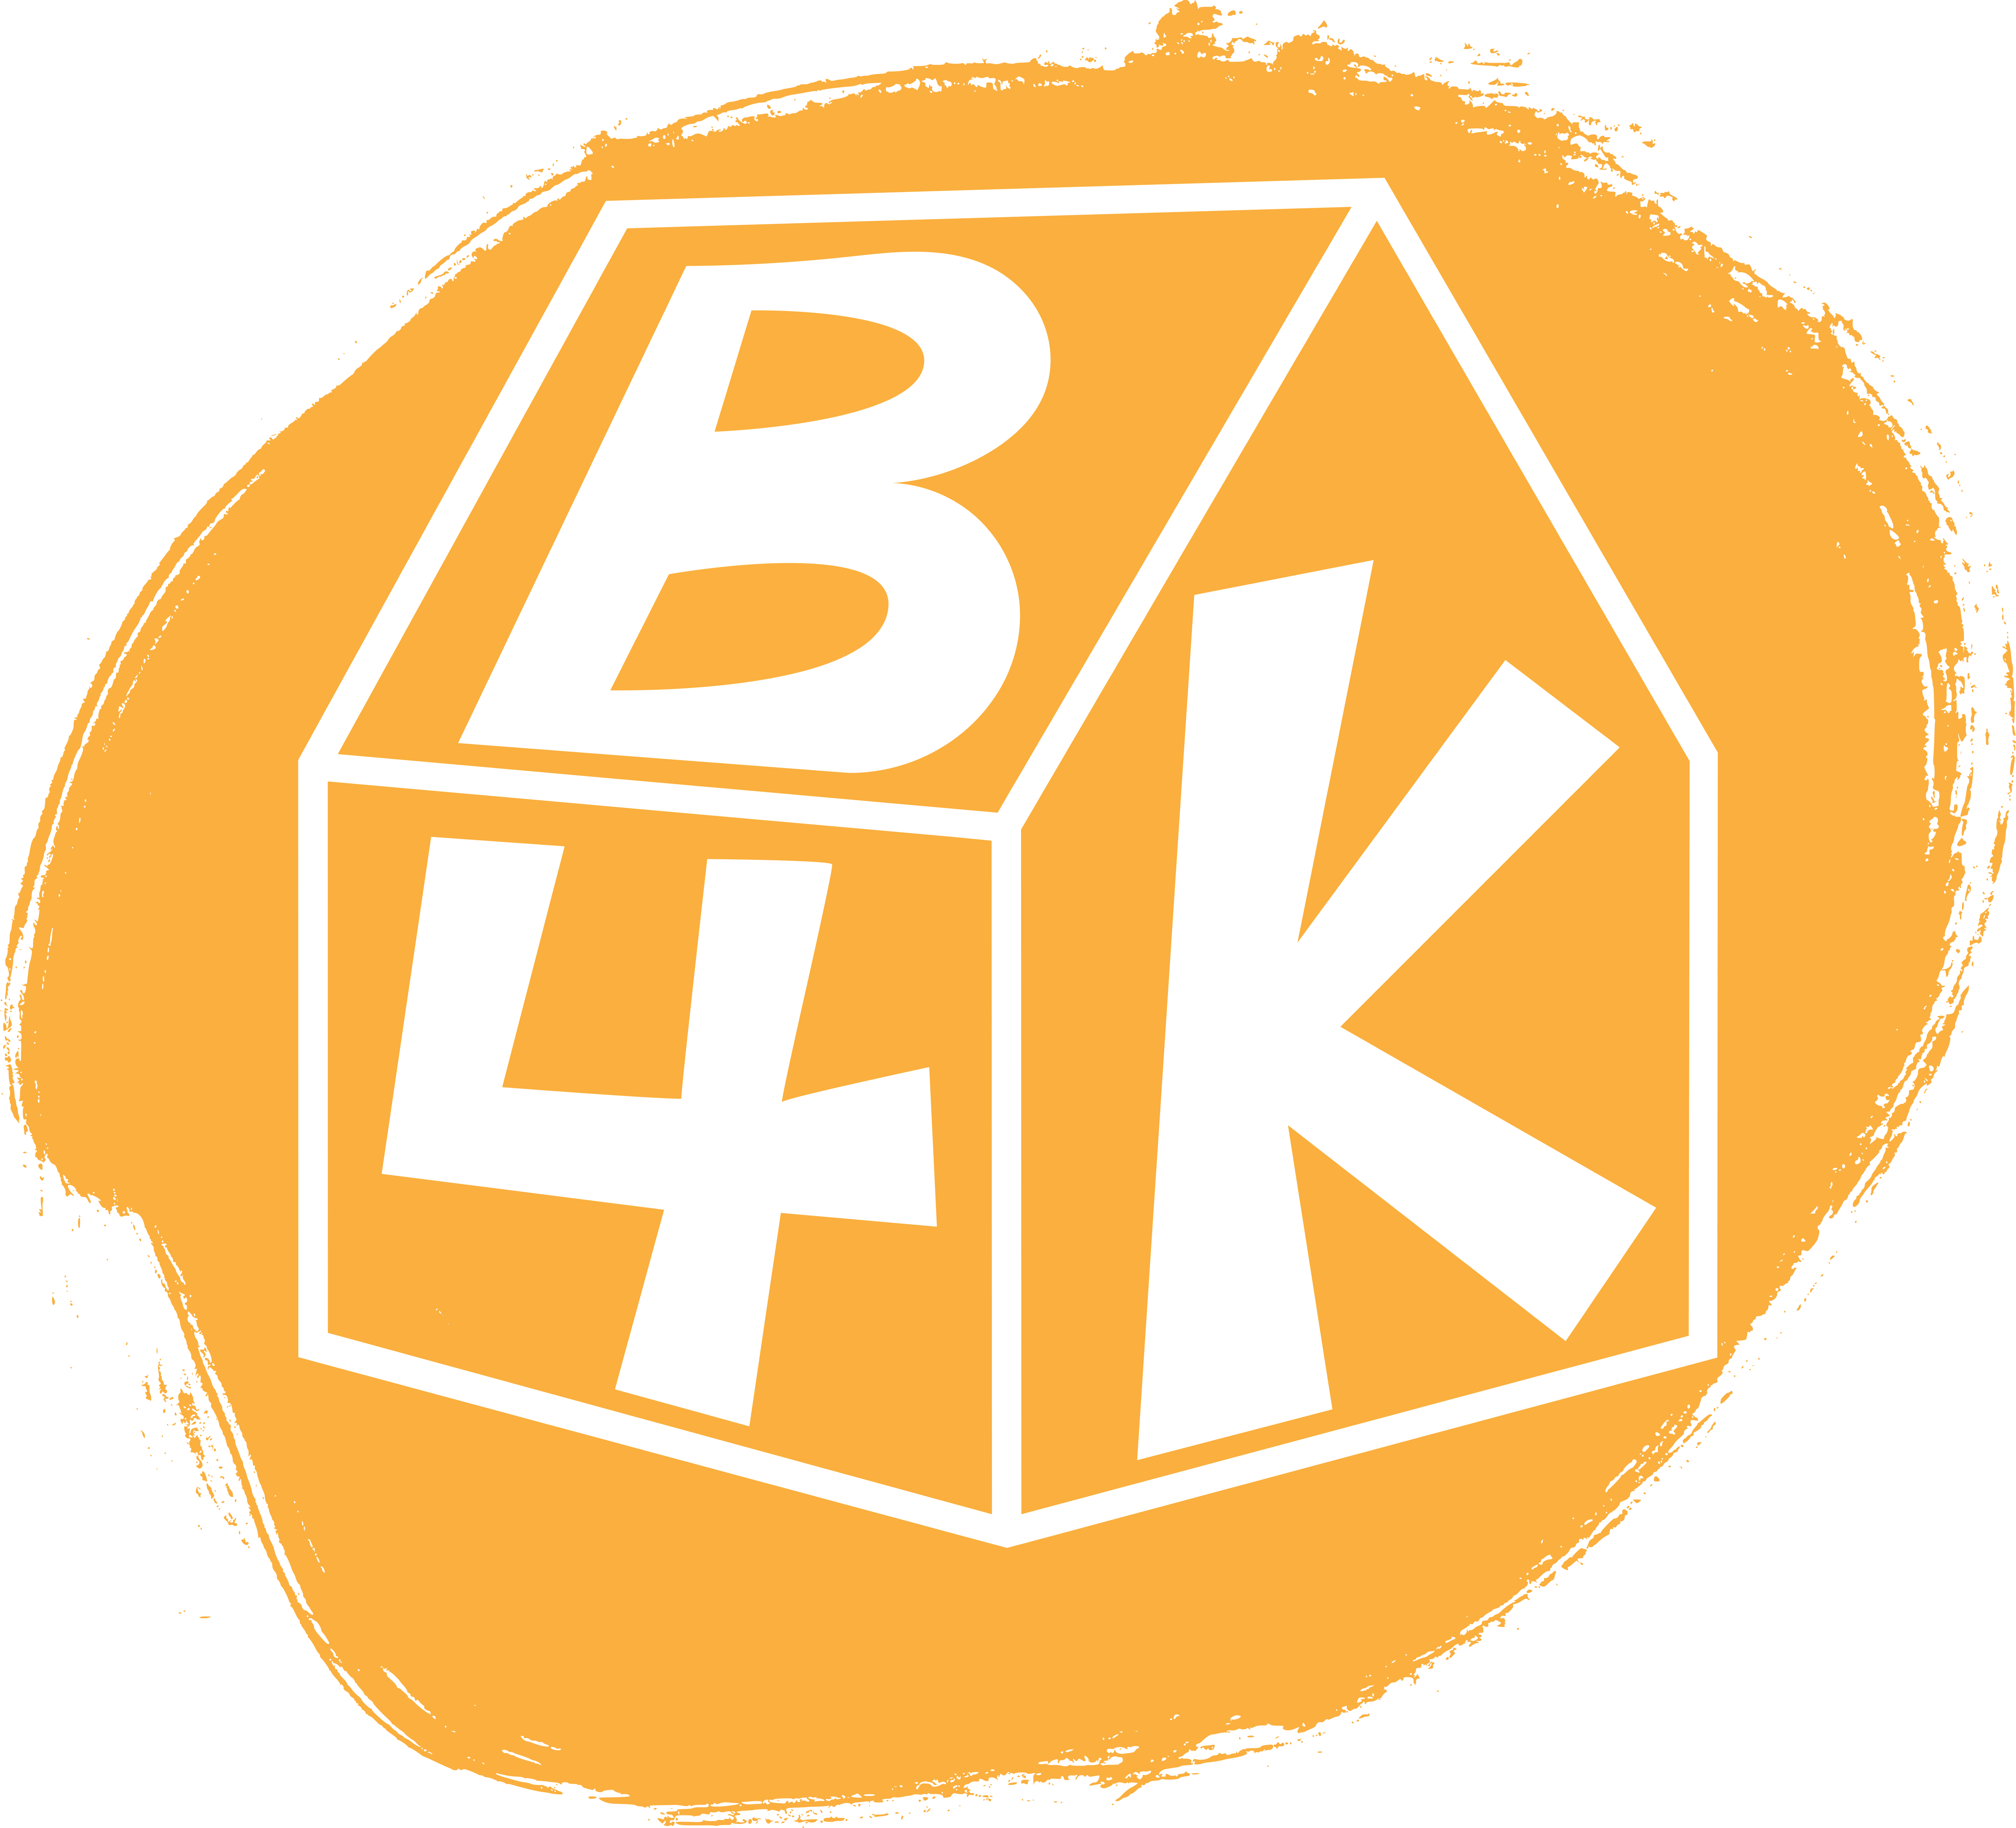 Building for Kids Logo